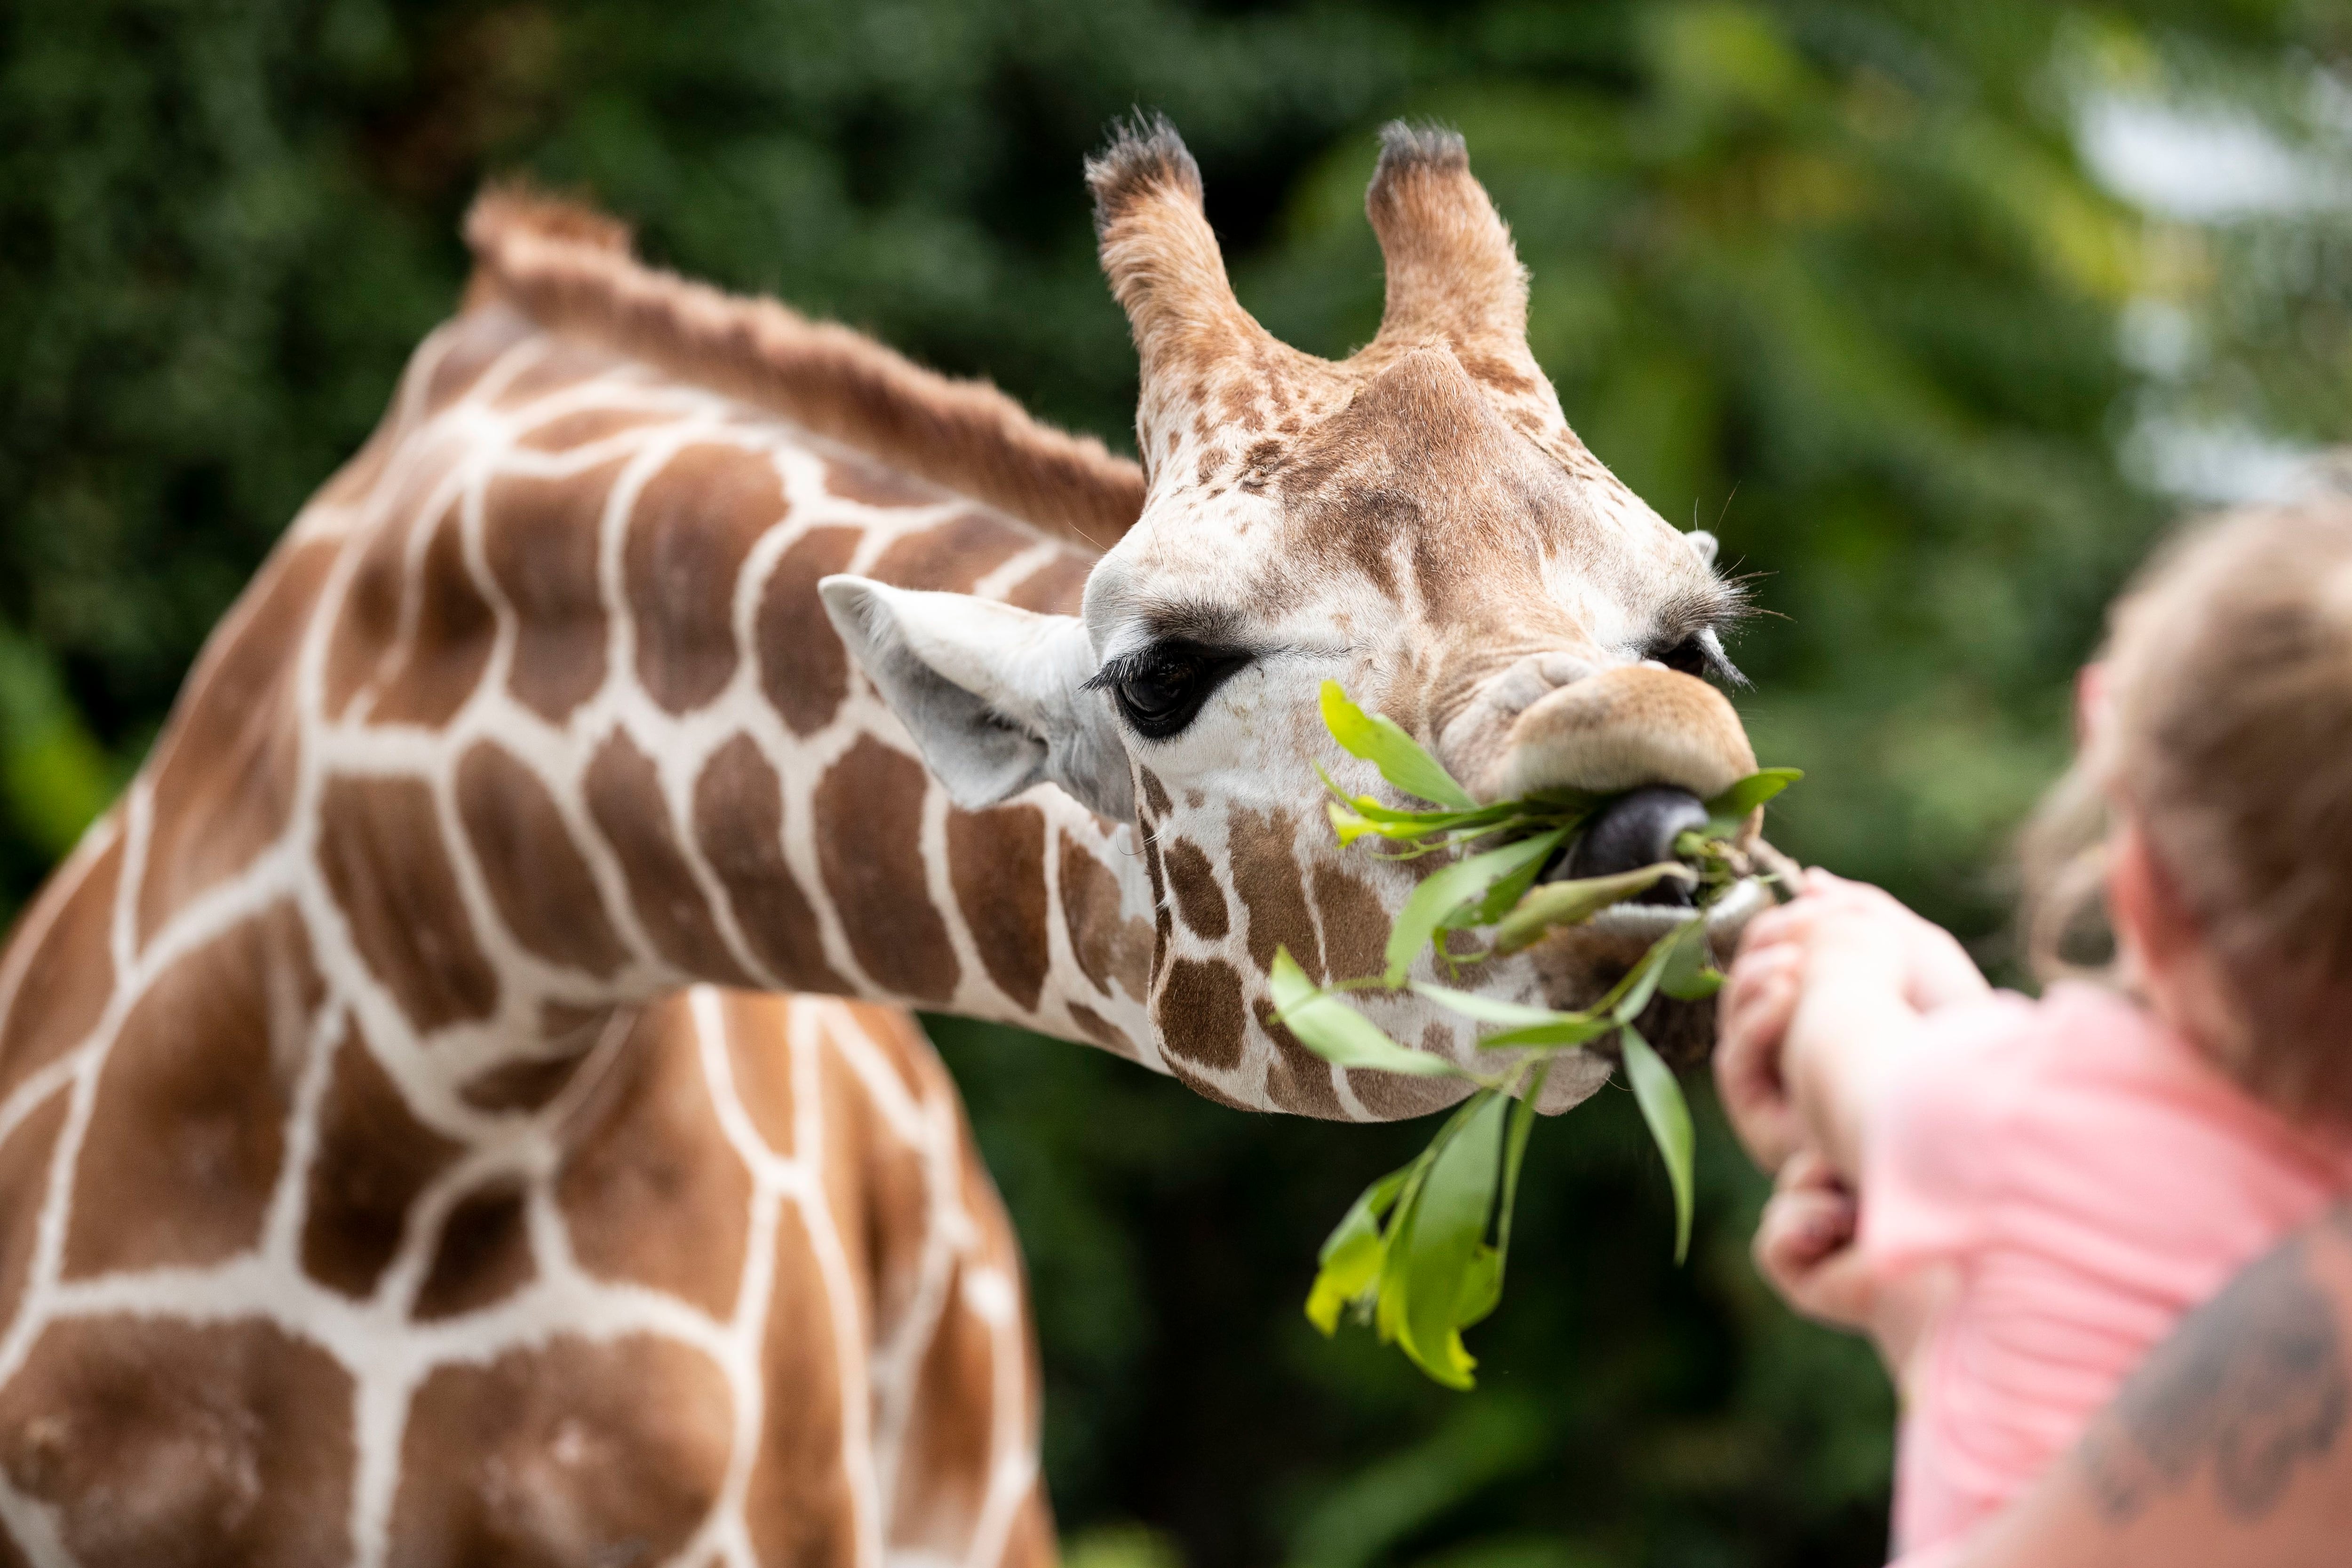 Philadelphia Zoo Giraffe Encounter exhibit lets visitors feed animals